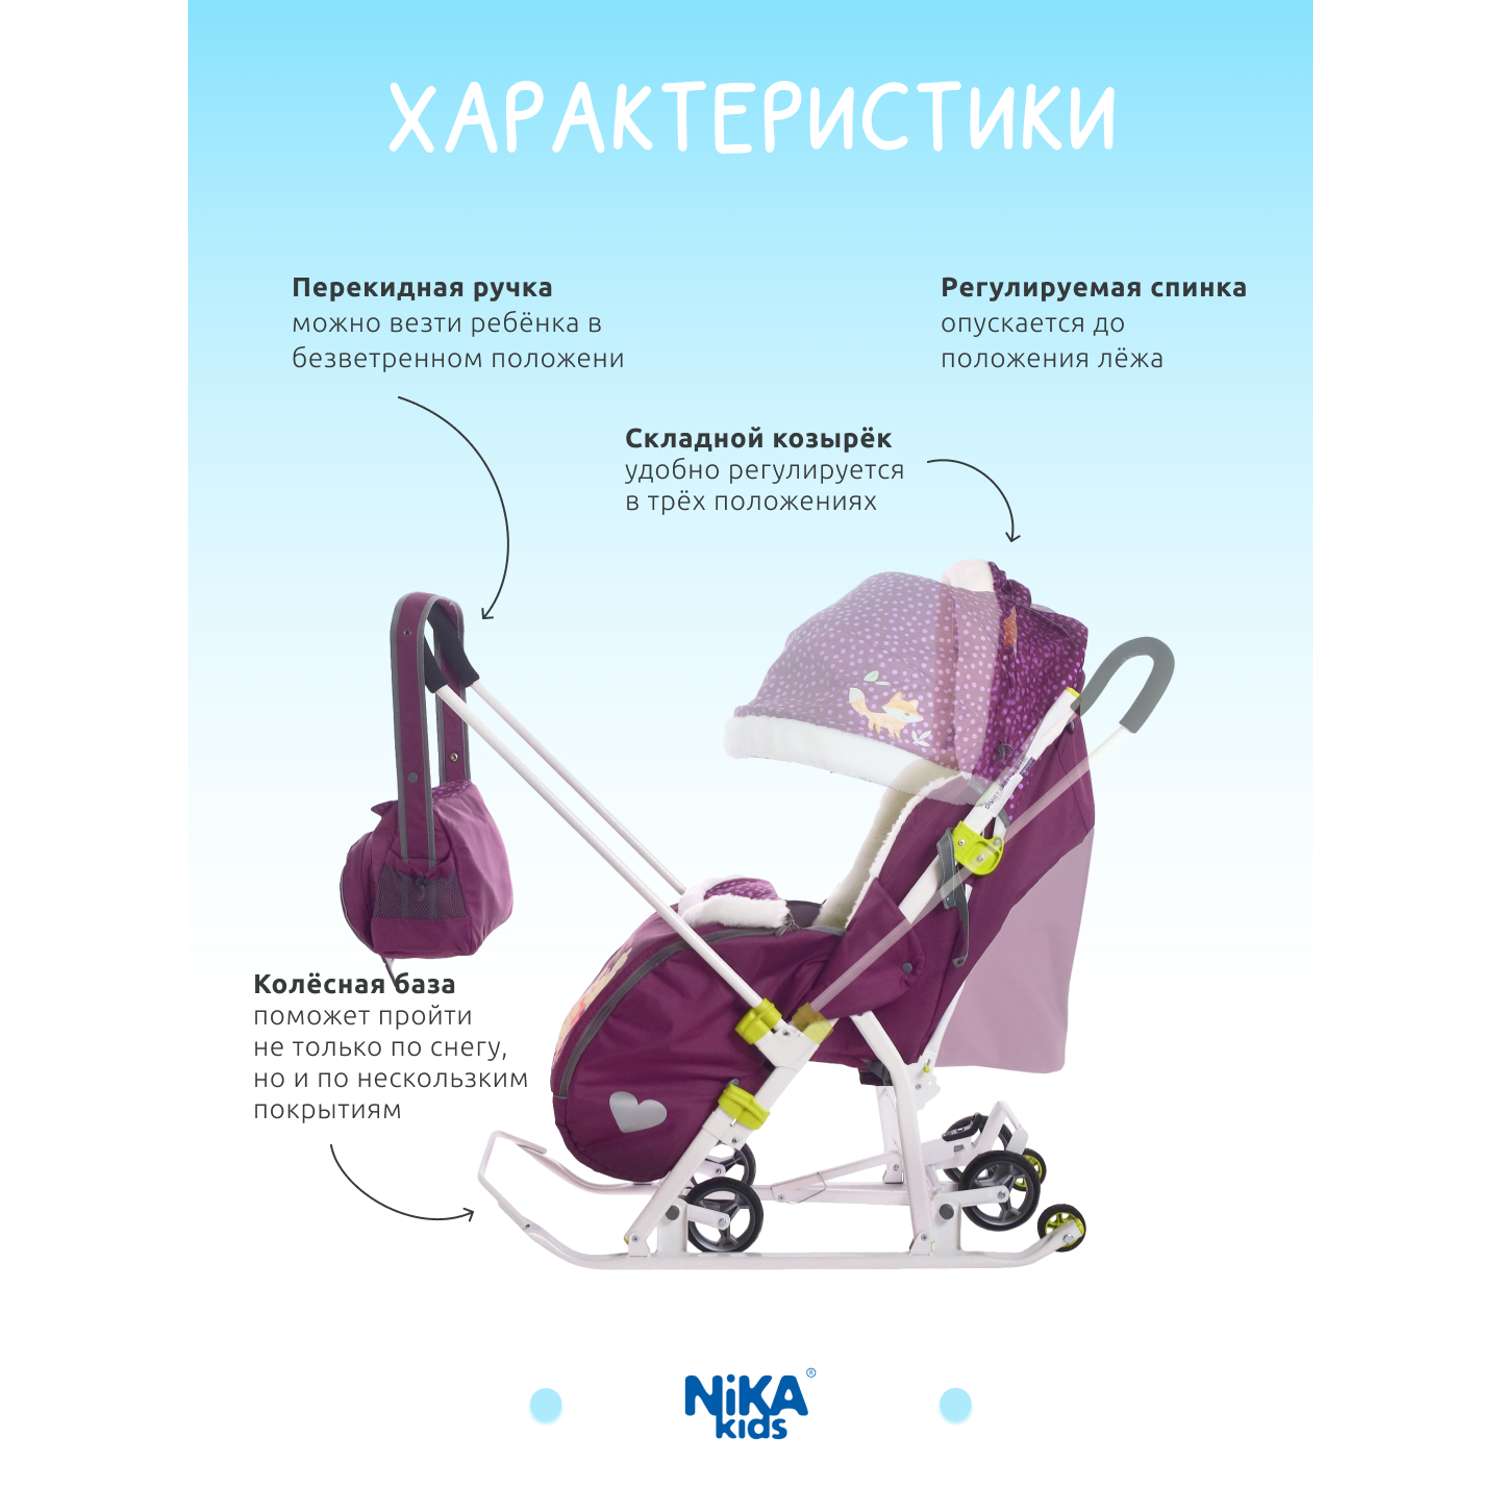 Зимние санки-коляска Nika kids для детей - фото 2